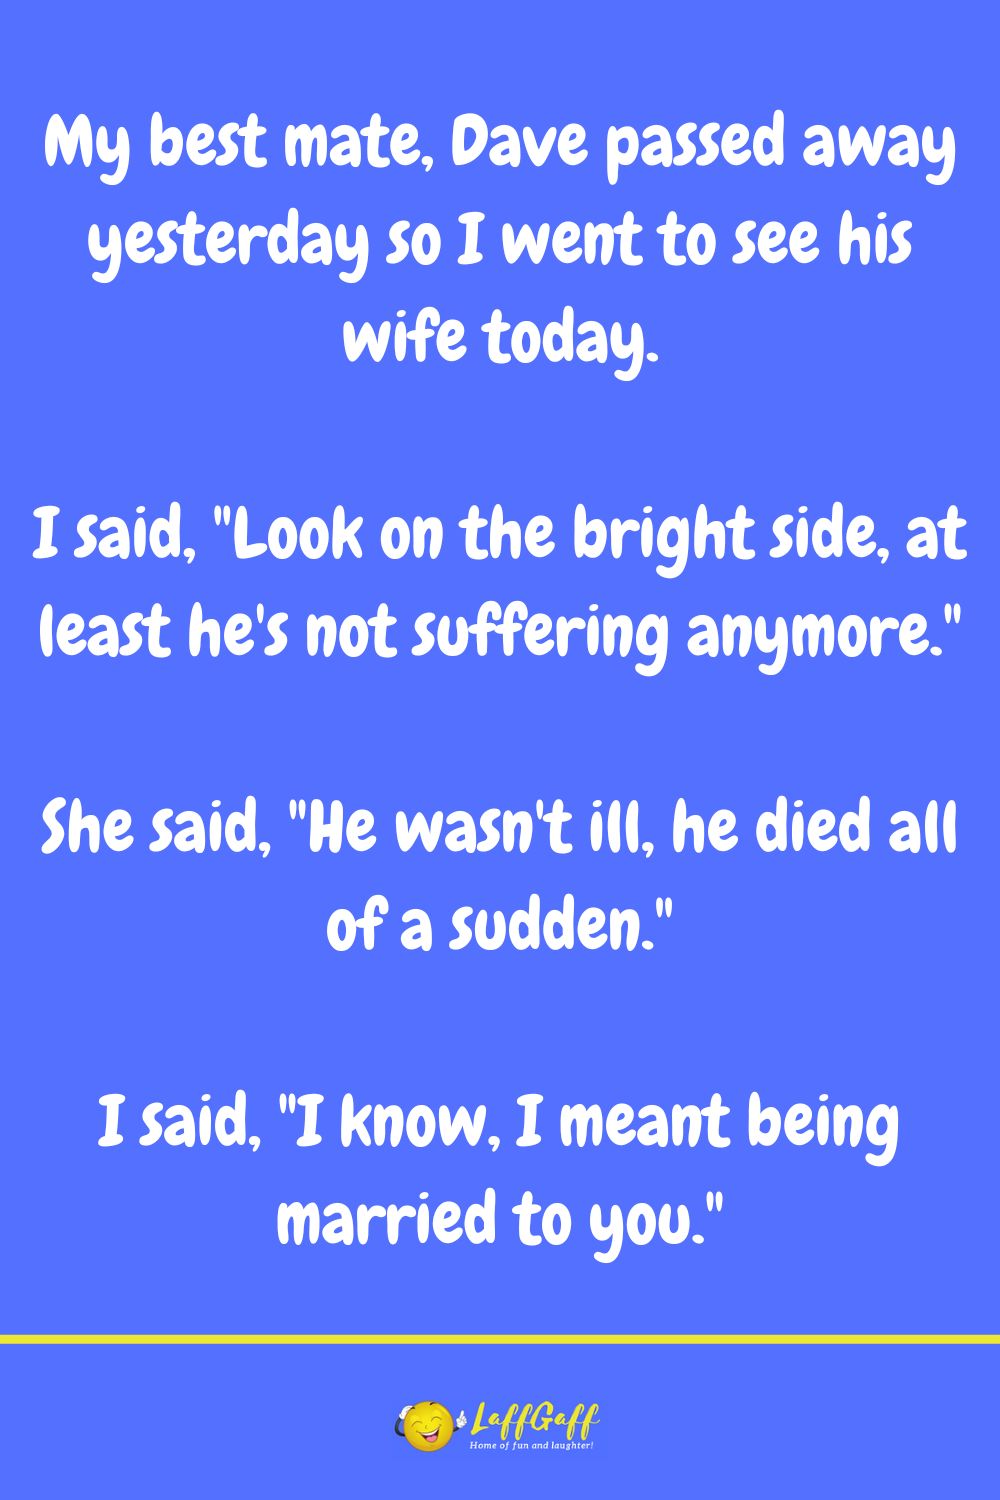 Husband death joke from LaffGaff.